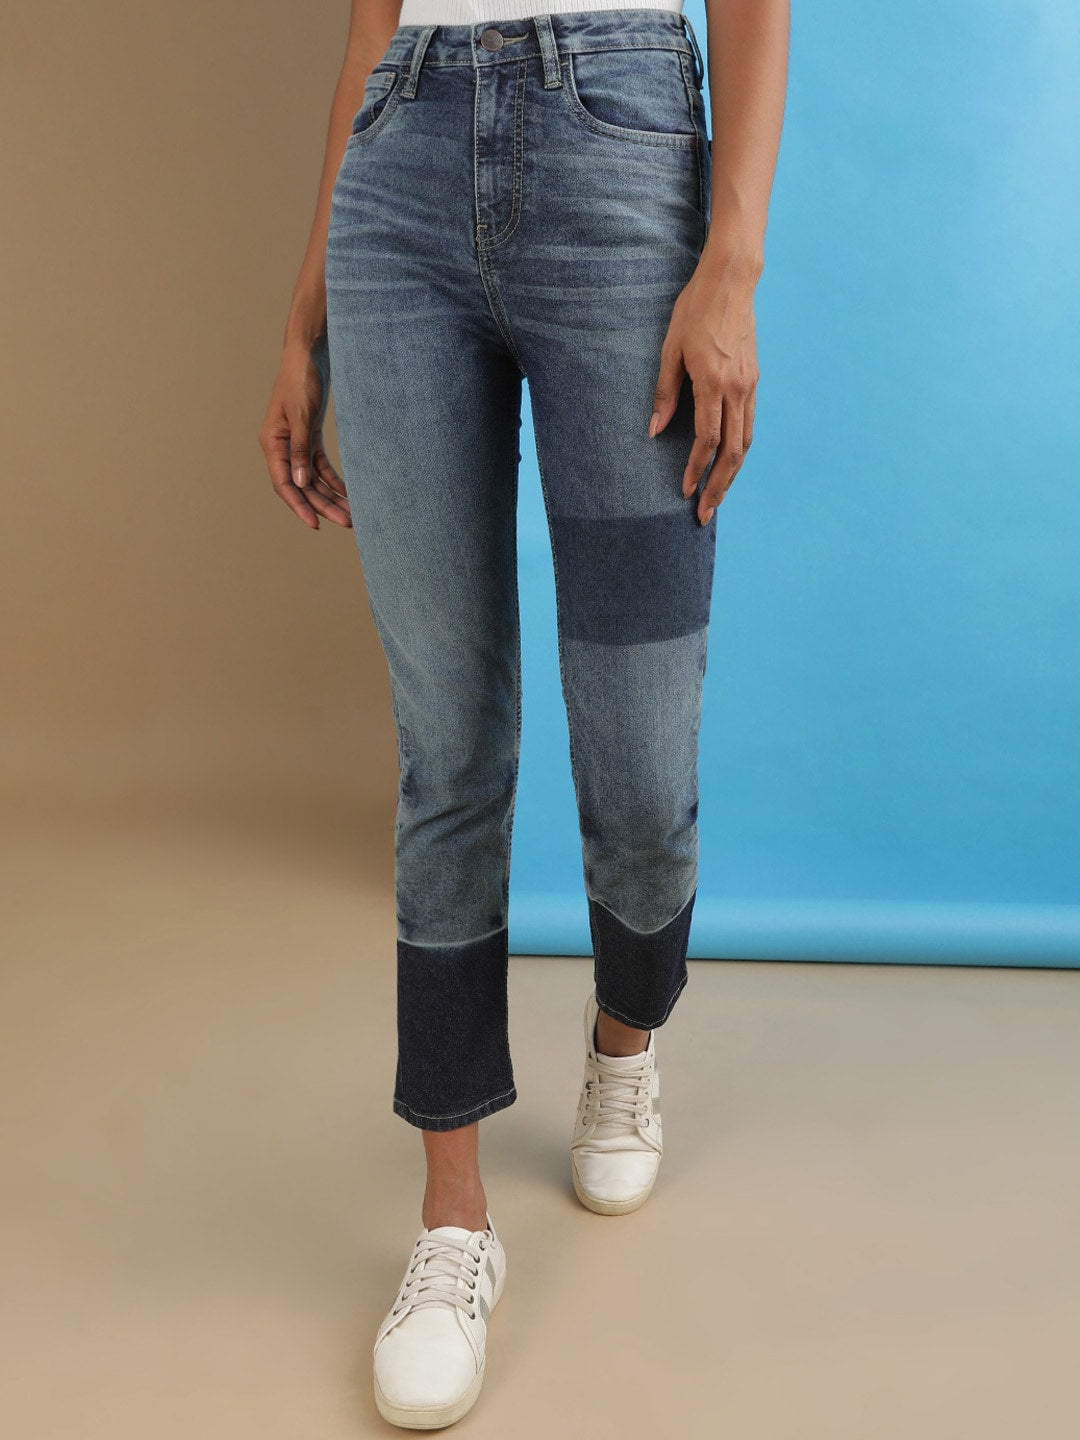 Shop Women Streetstyle Straight Fit Jeans Online.